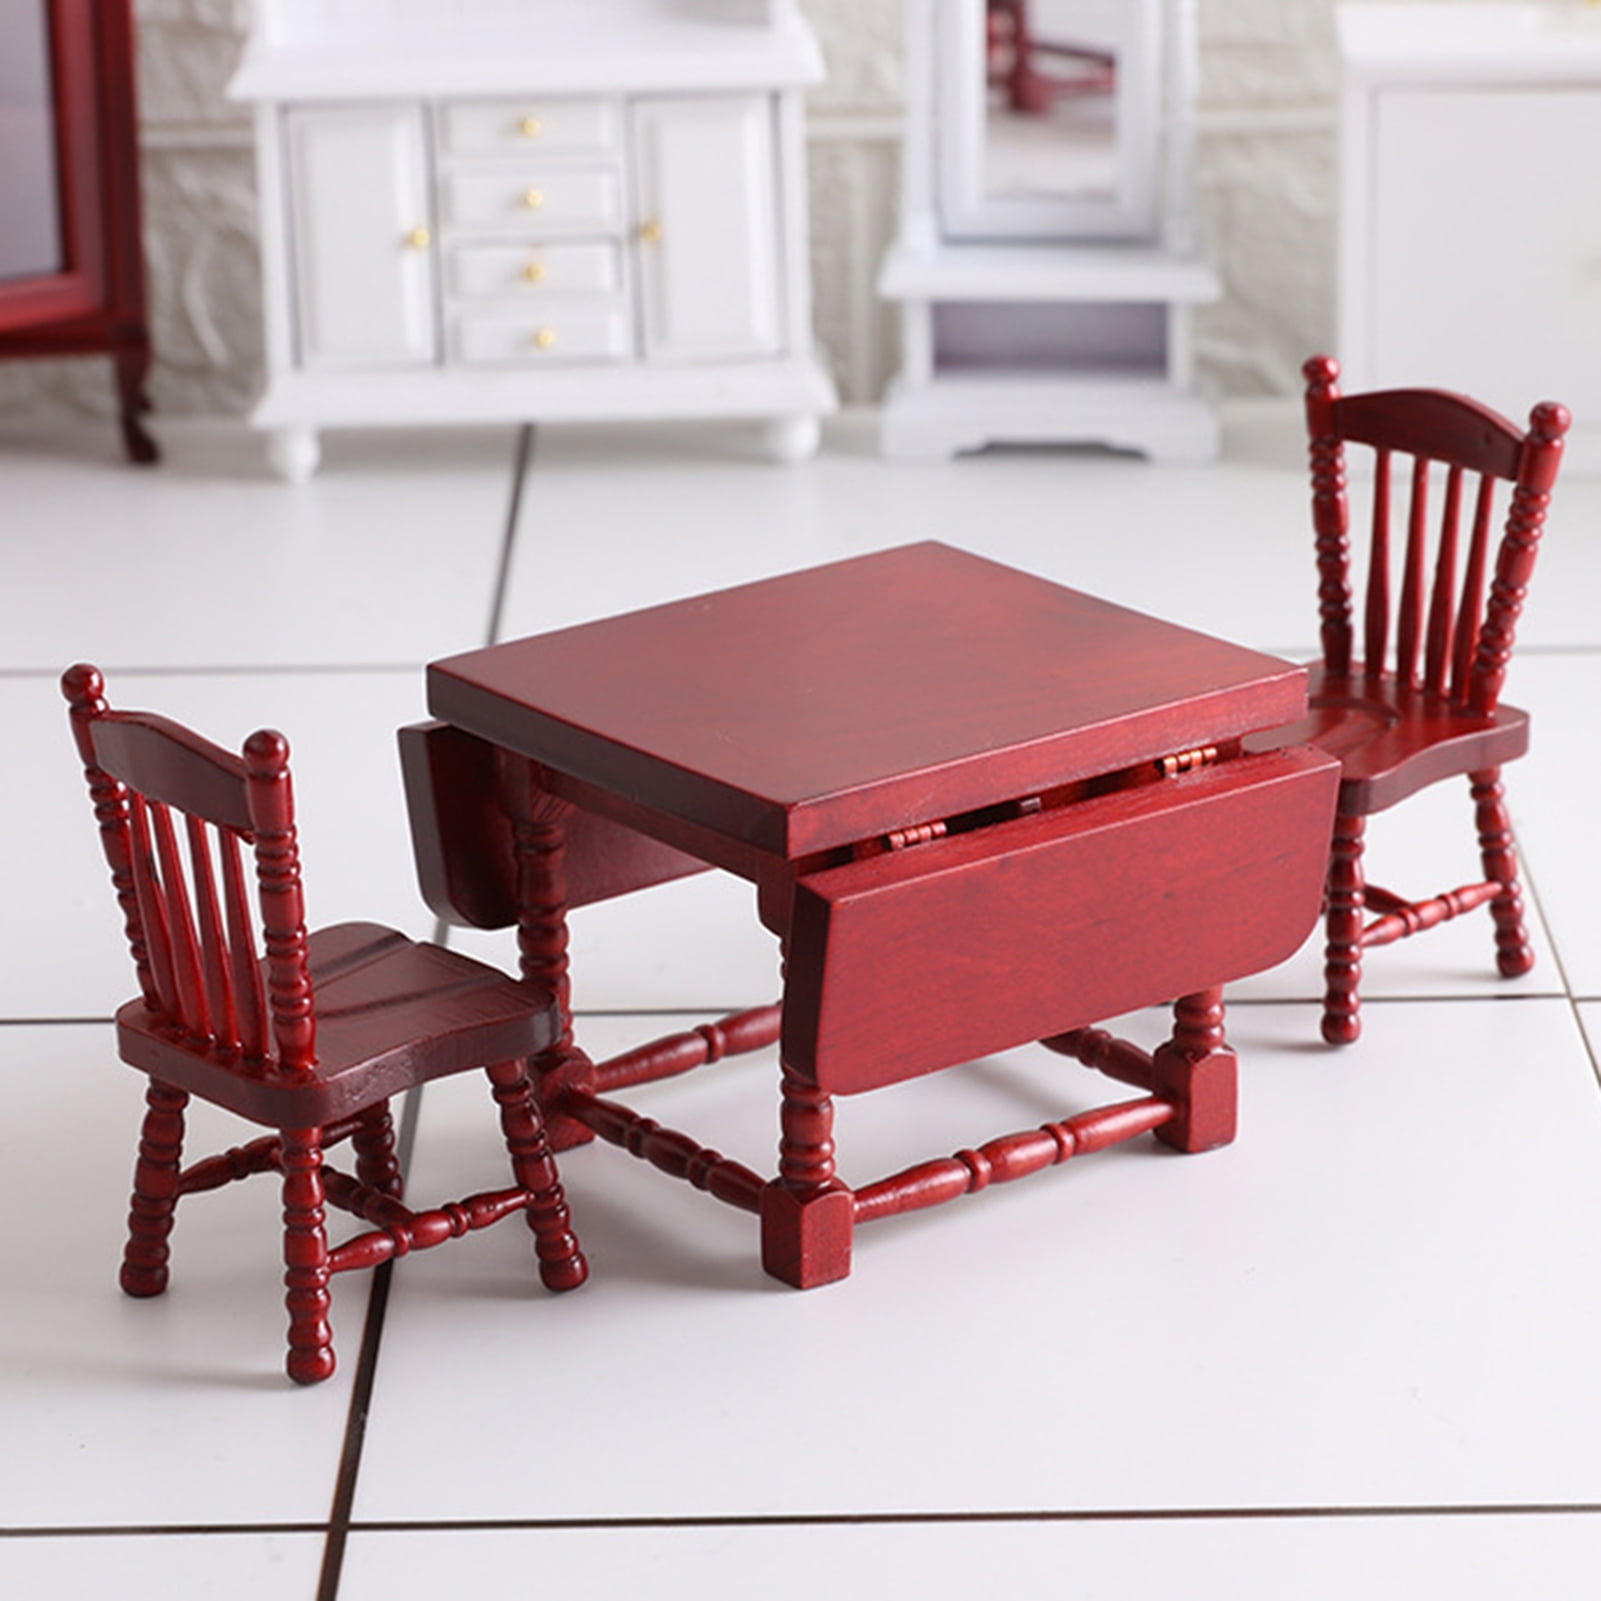 Farfi Birch Folding Table Chair Model Accessories Decor Craft Gift 